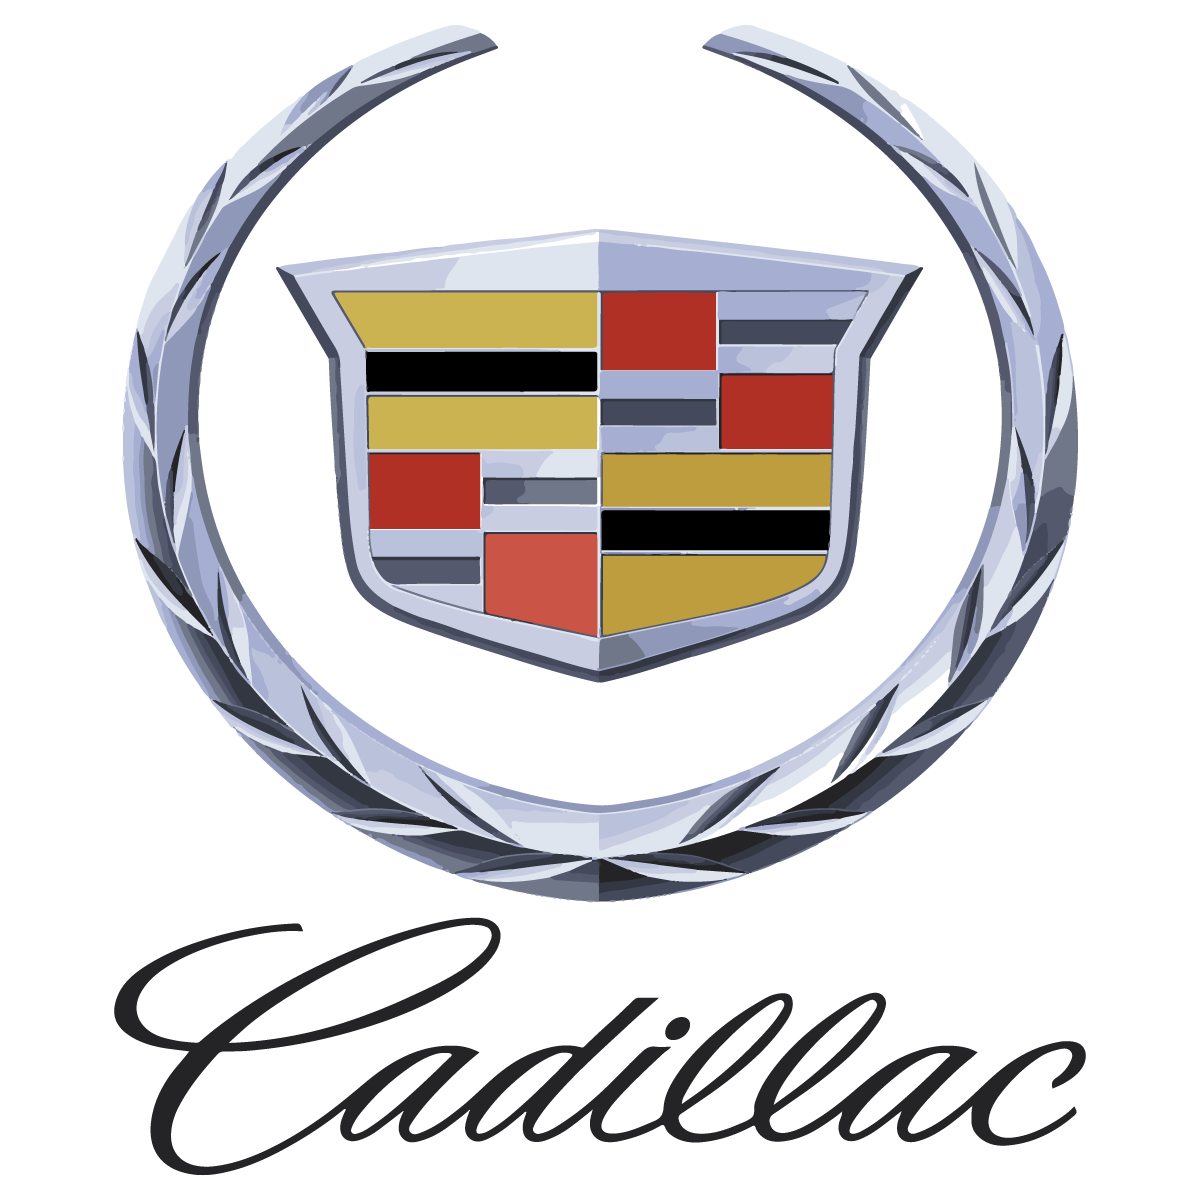 Марка автомобиля Кадиллак лого. Значок автомобиля Cadillac. Значок Кадиллака и Джилли. Кадиллак Geely. Кадиллак логотип